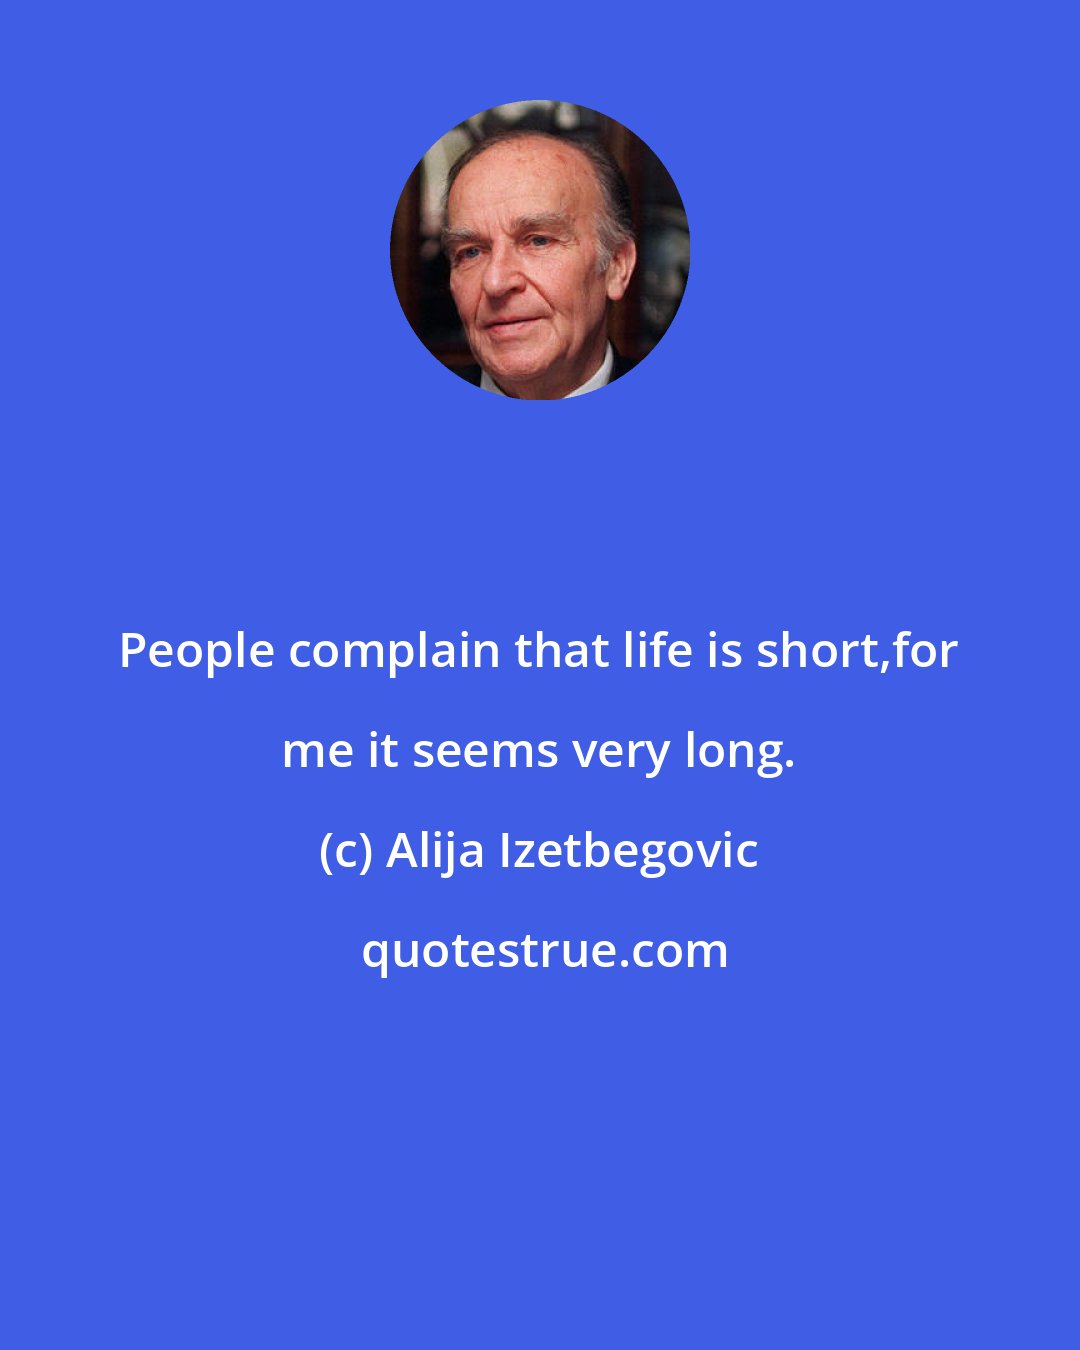 Alija Izetbegovic: People complain that life is short,for me it seems very long.